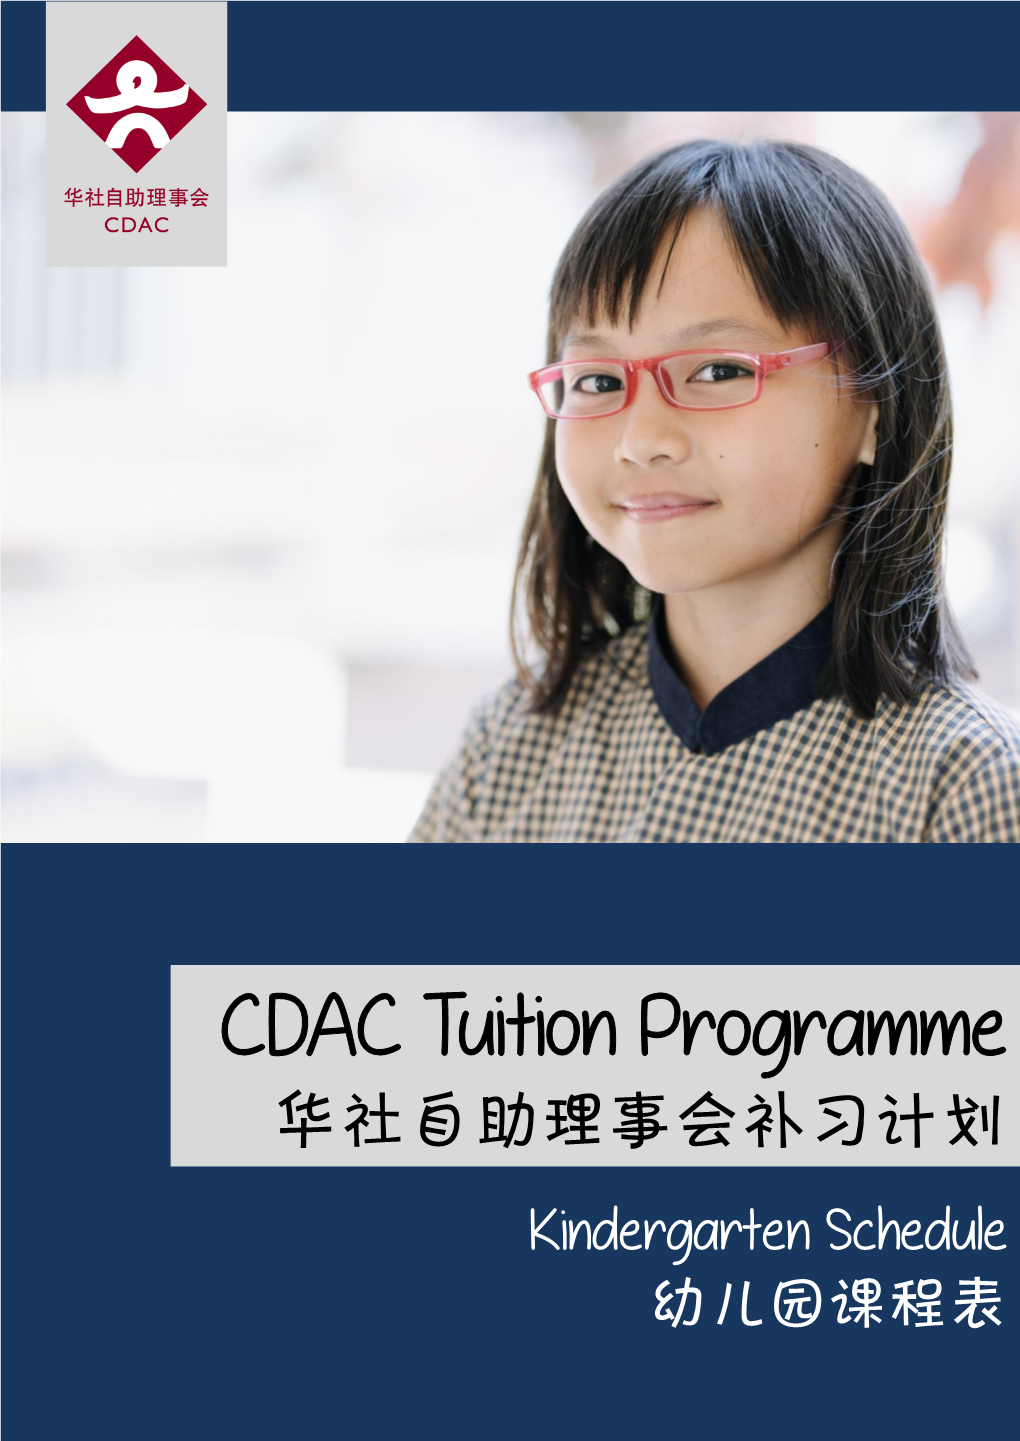 CDAC Tuition Programme 华社自助理事会补习计划 Kindergarten Schedule 幼儿园课程表 List of Centres & Addresses